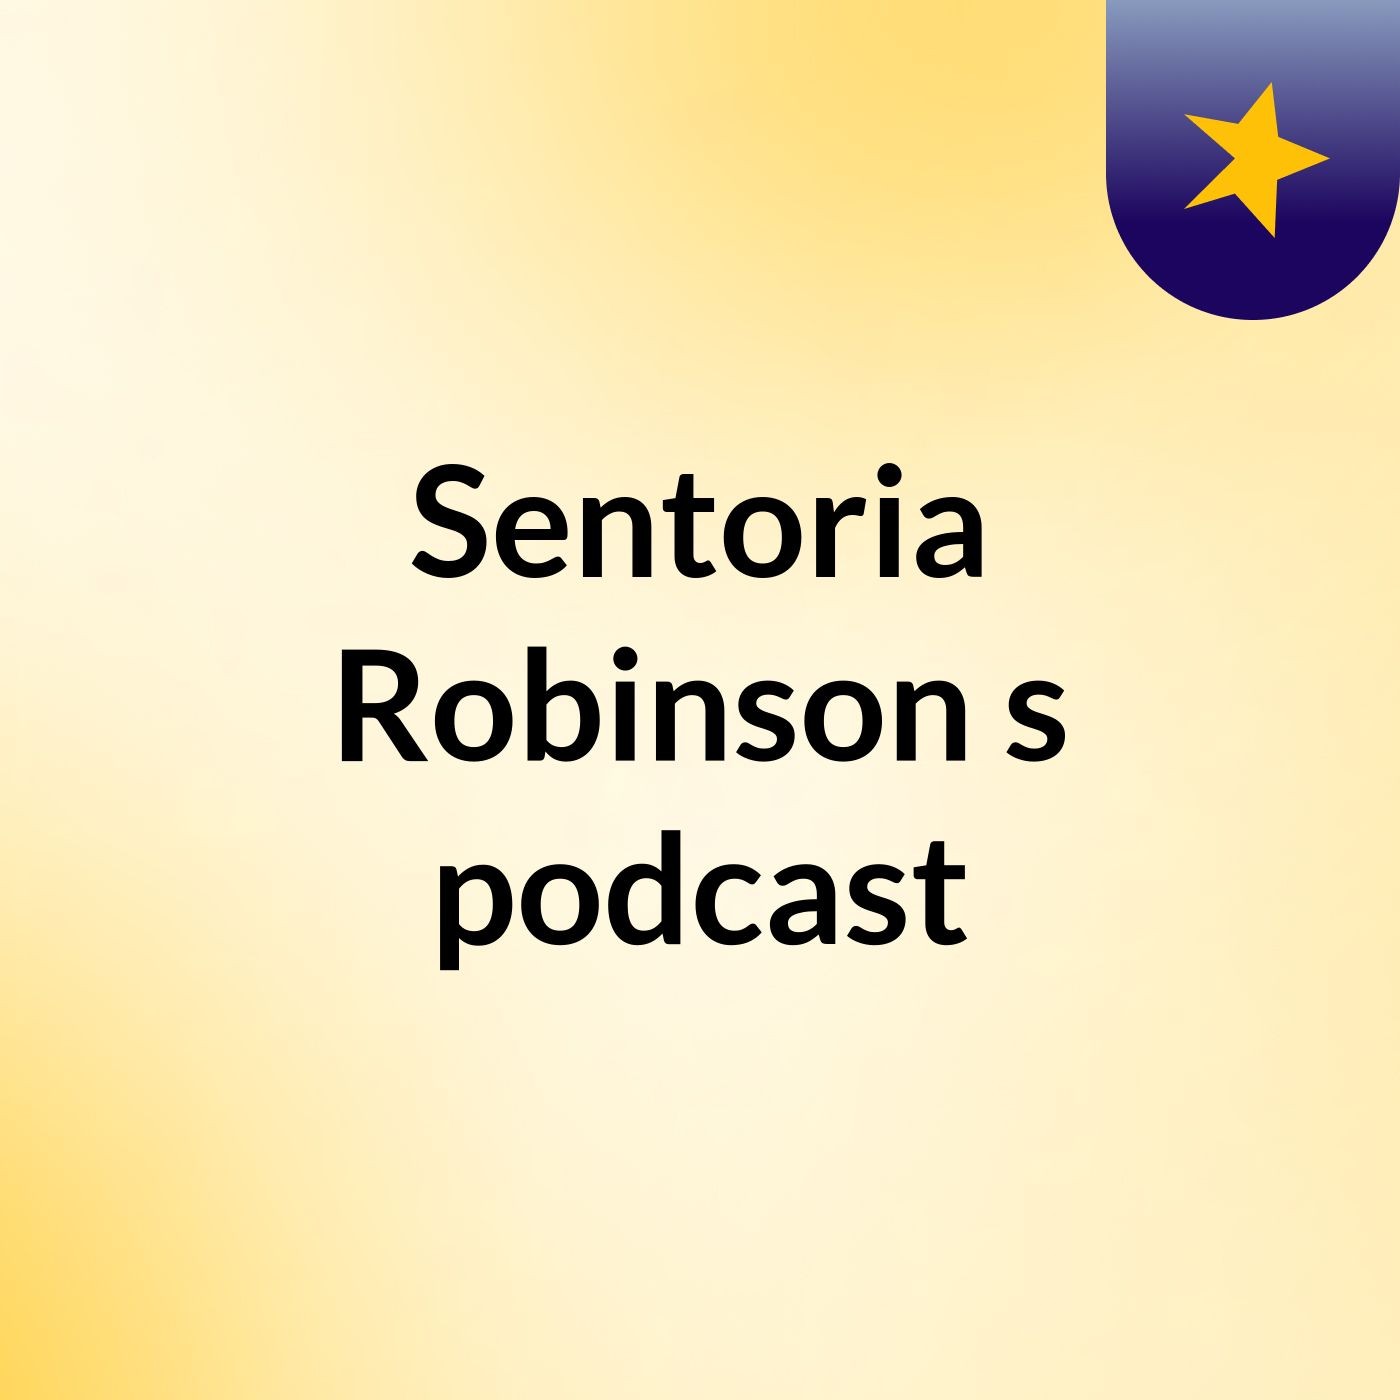 Episode 2 - Sentoria Robinson's podcast